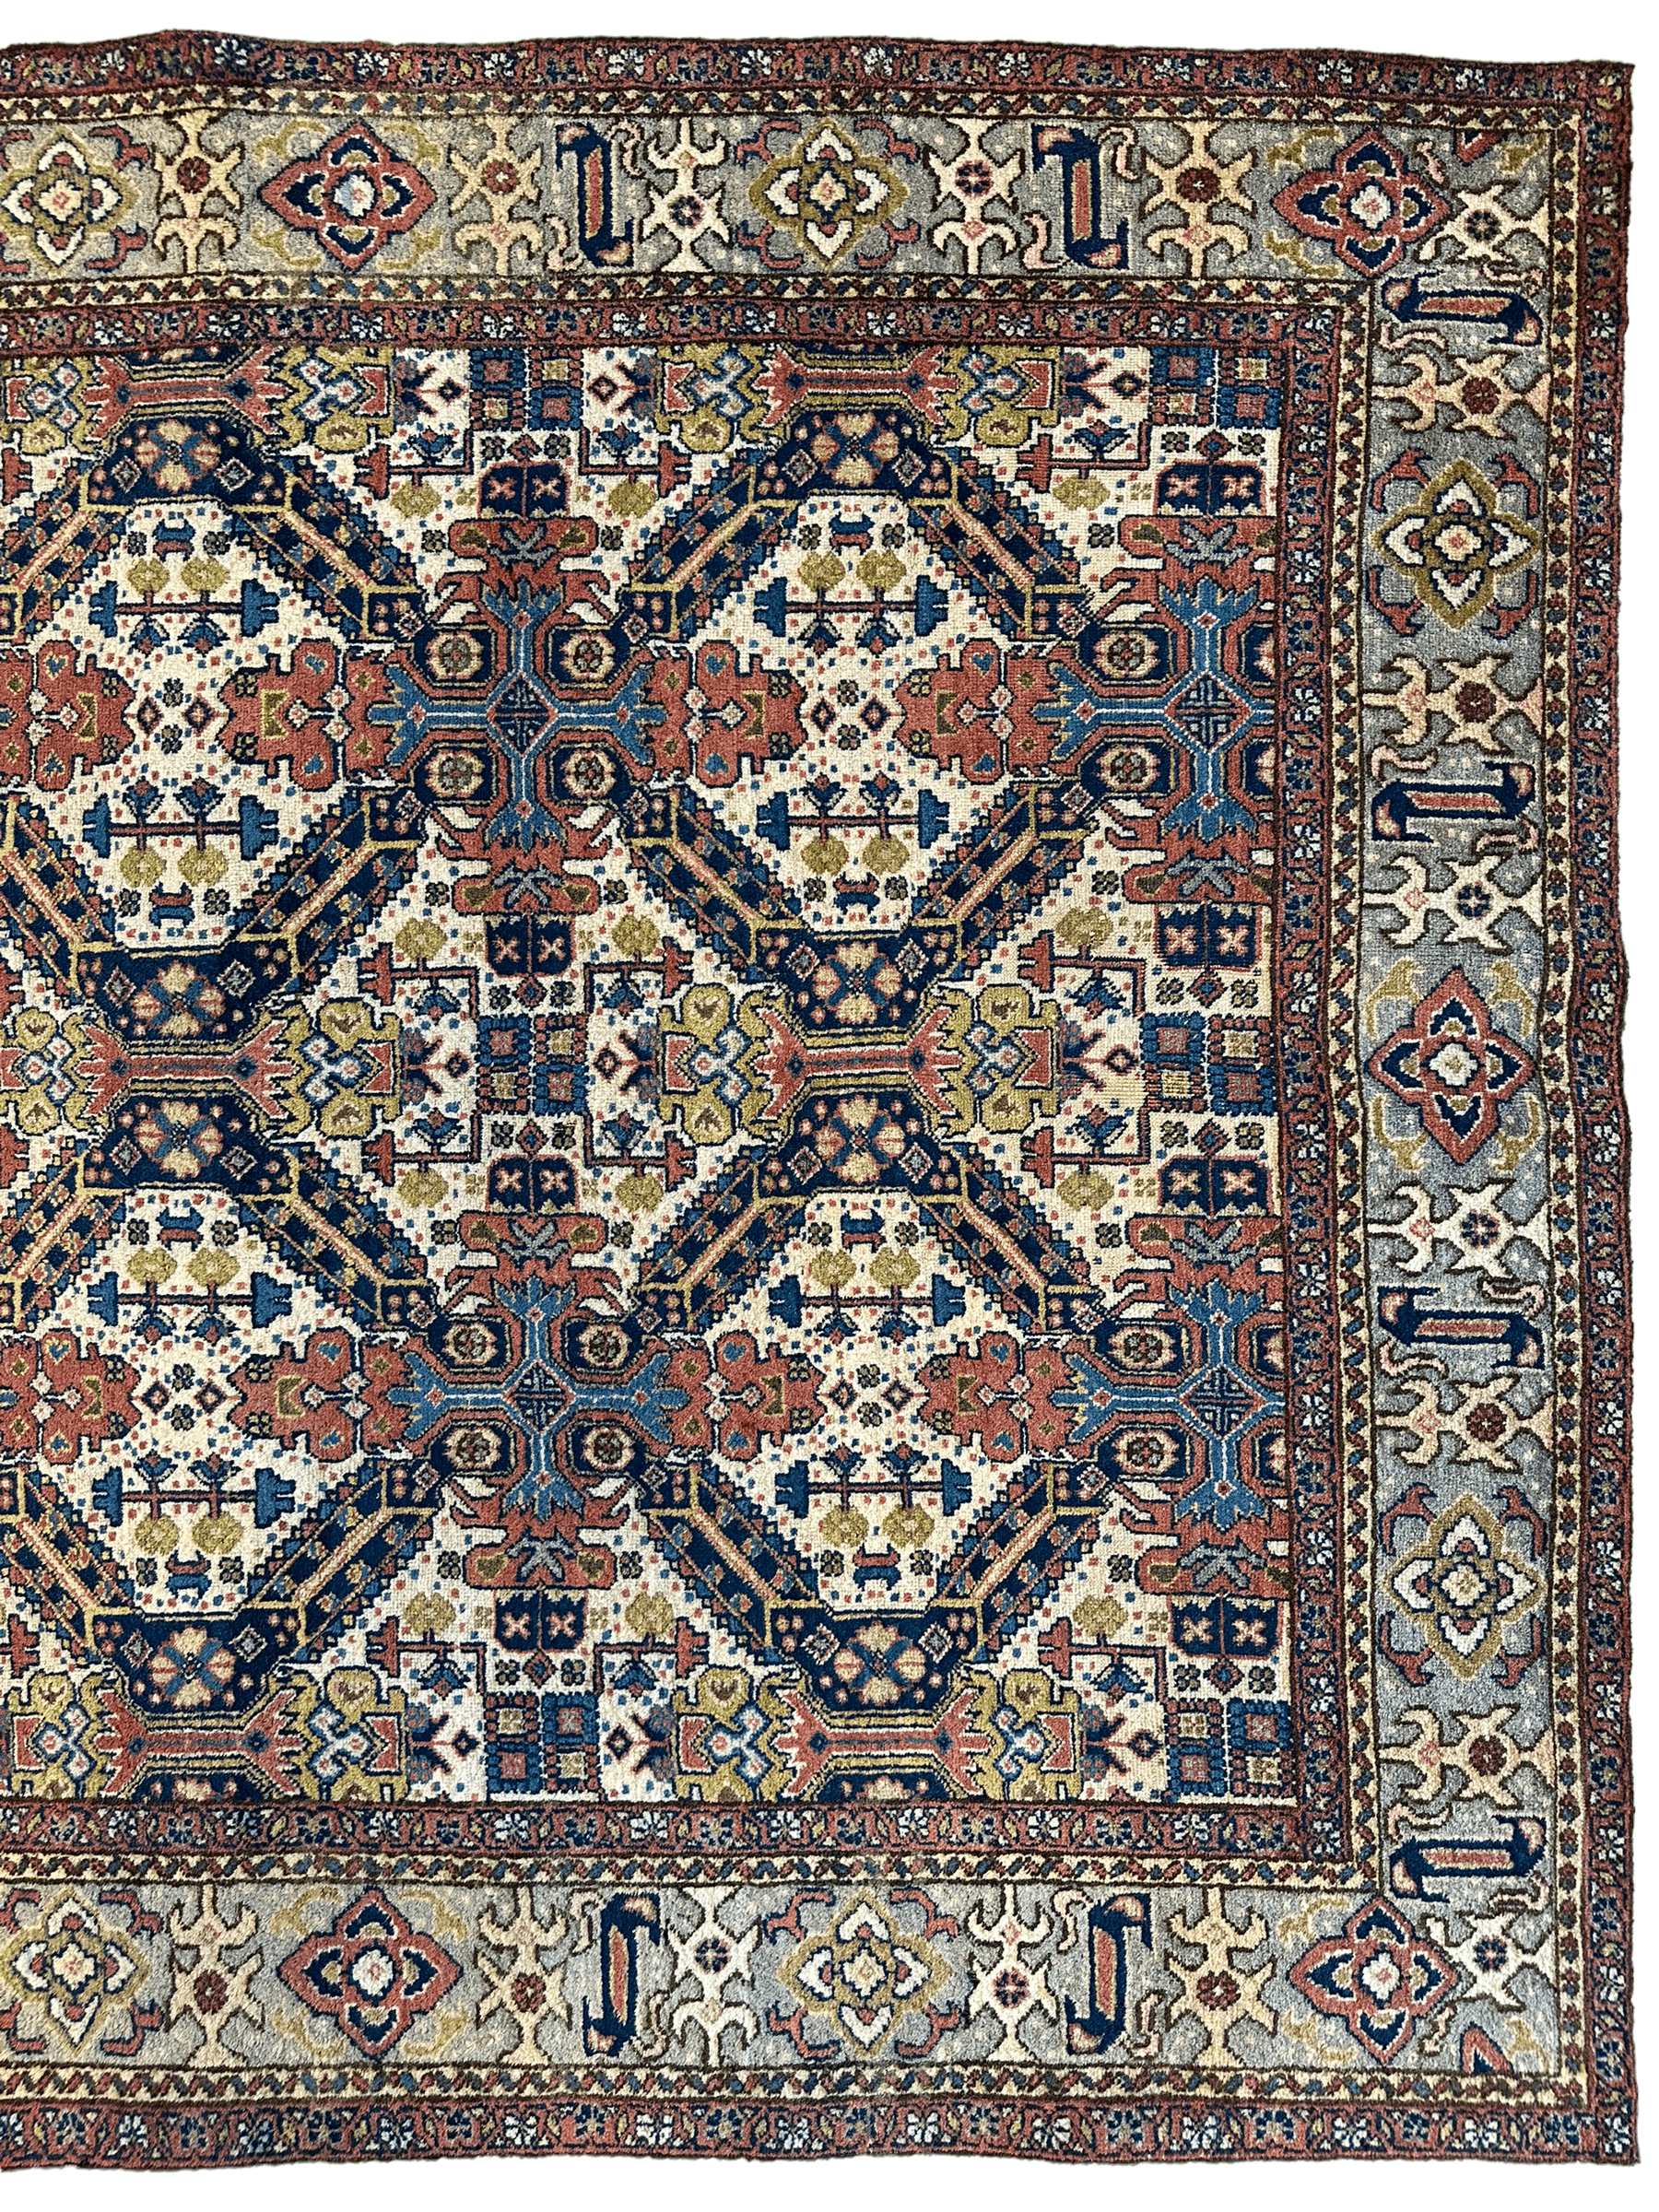 Handmade One-of-a-Kind Persian Tabriz Wool Rug - 5’3” x 7’8”